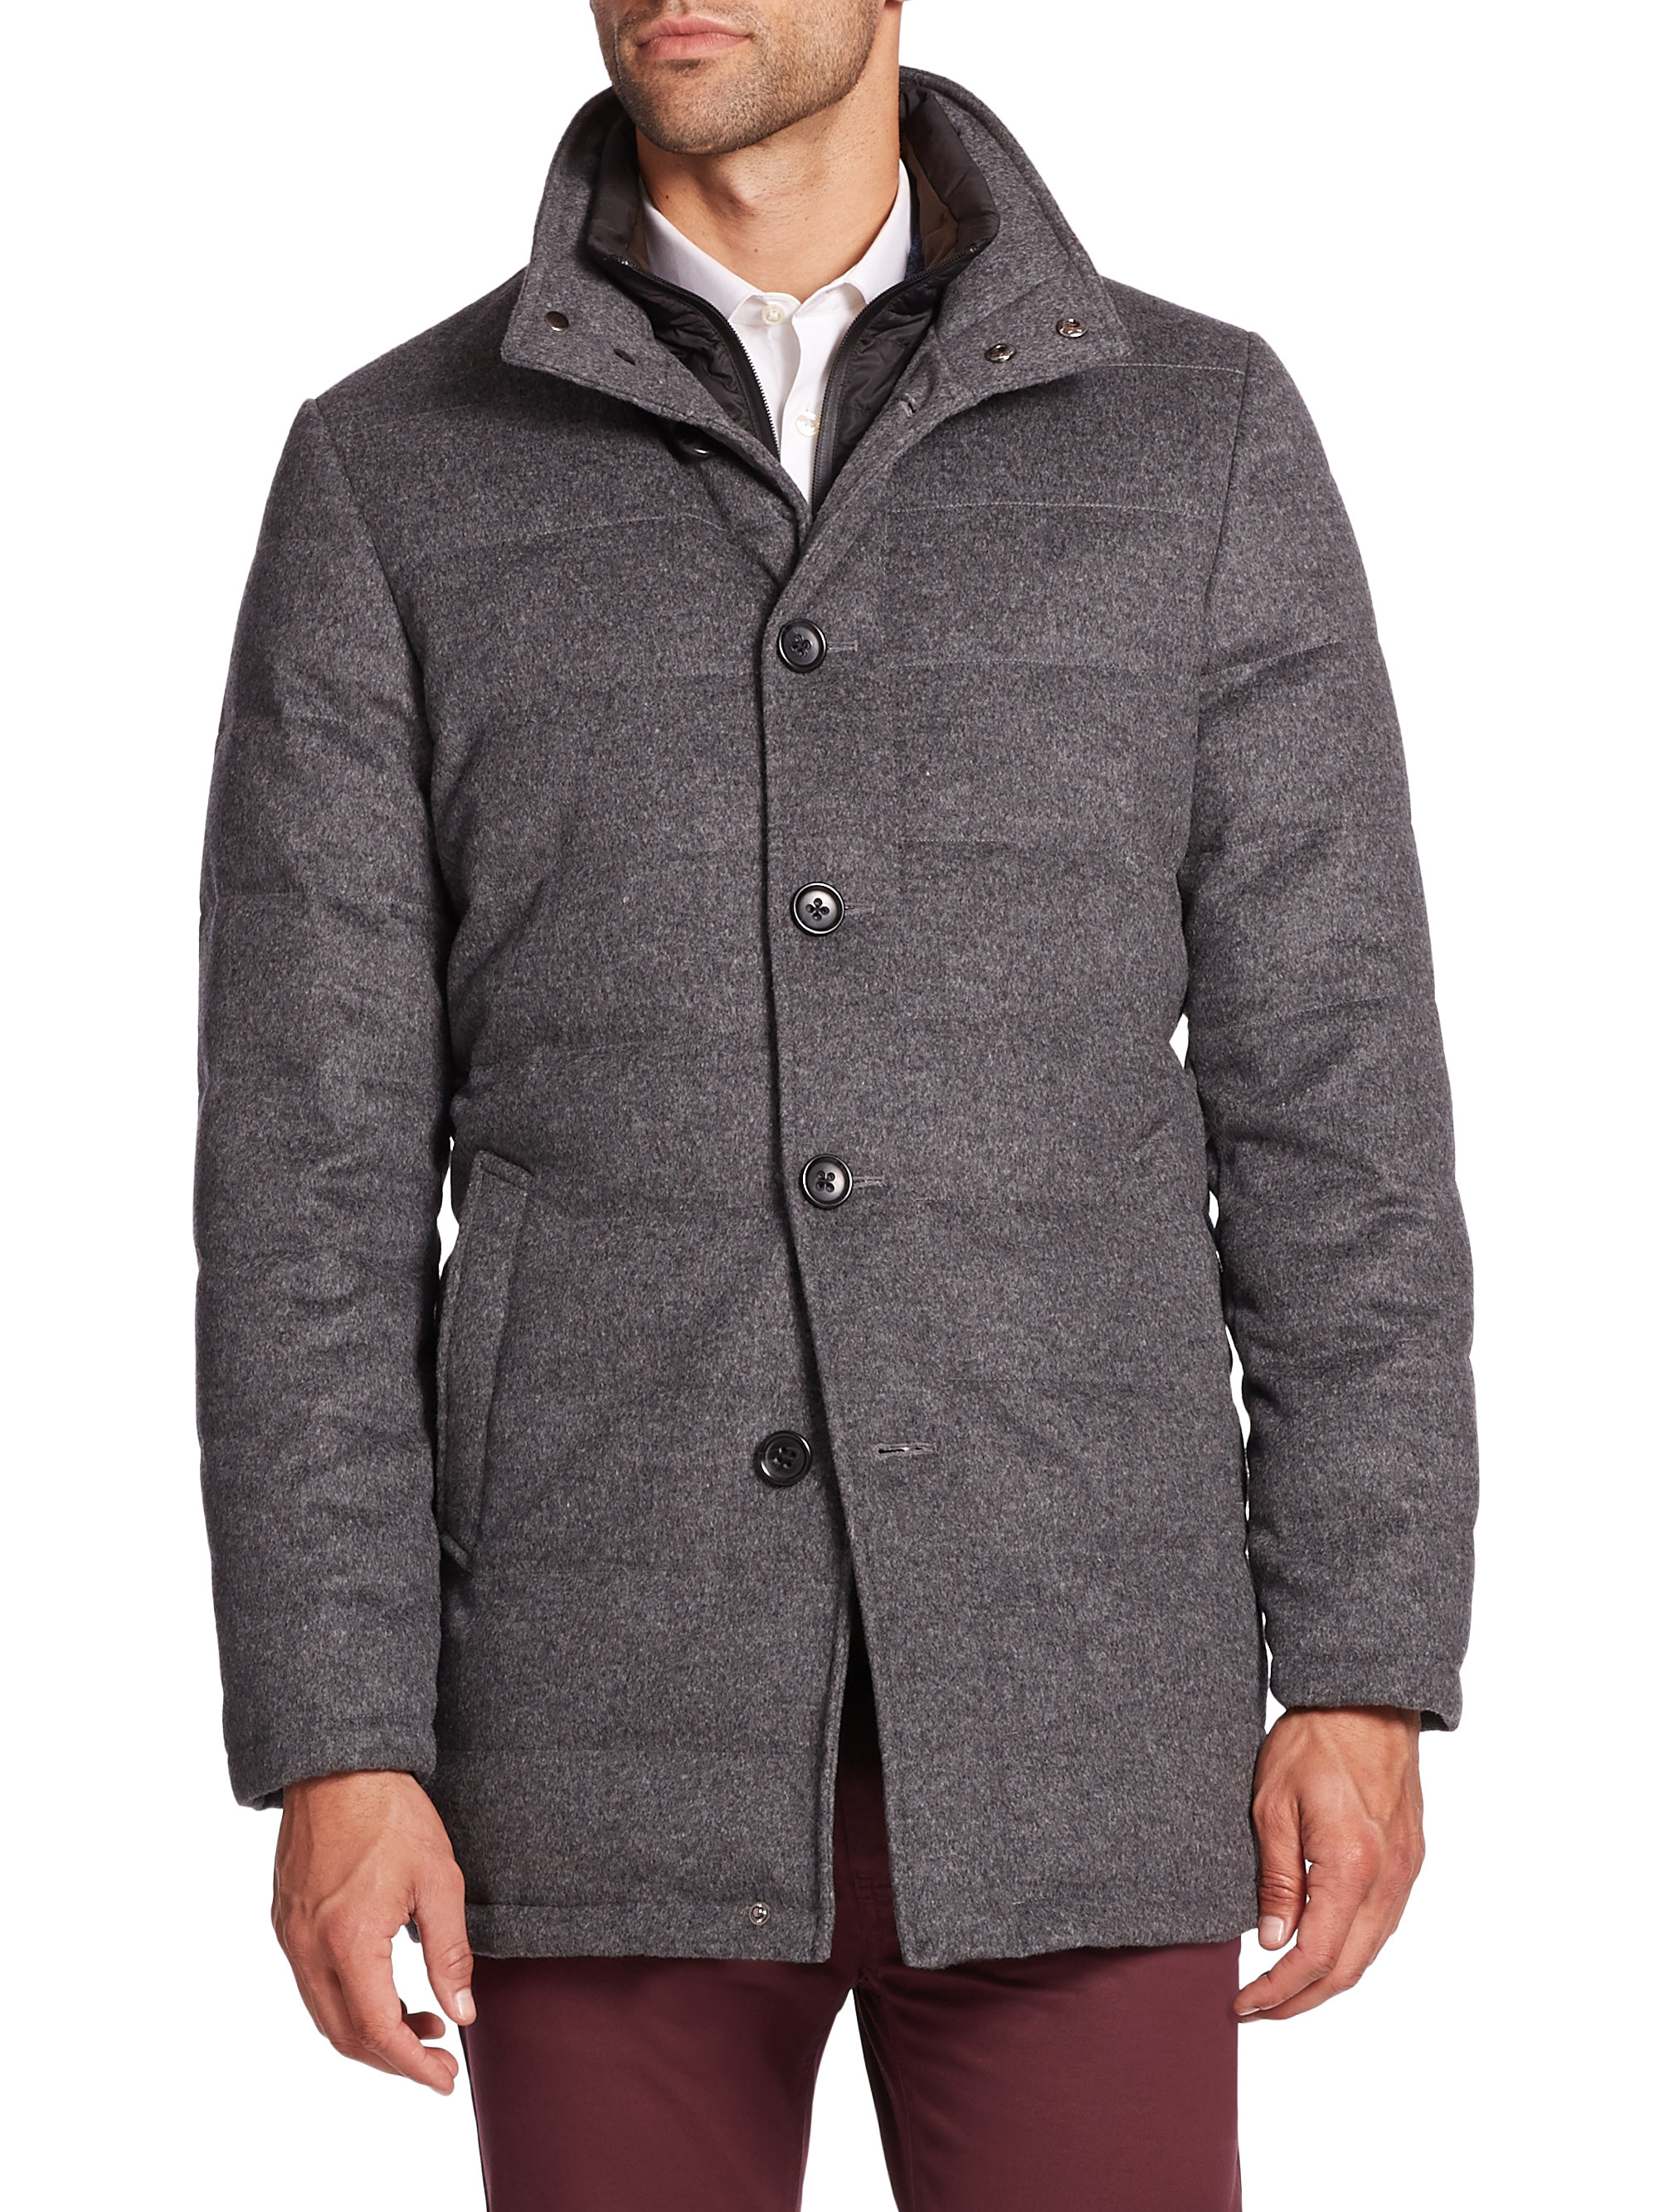 Lyst - Saks Fifth Avenue Wool Puffer Jacket in Gray for Men